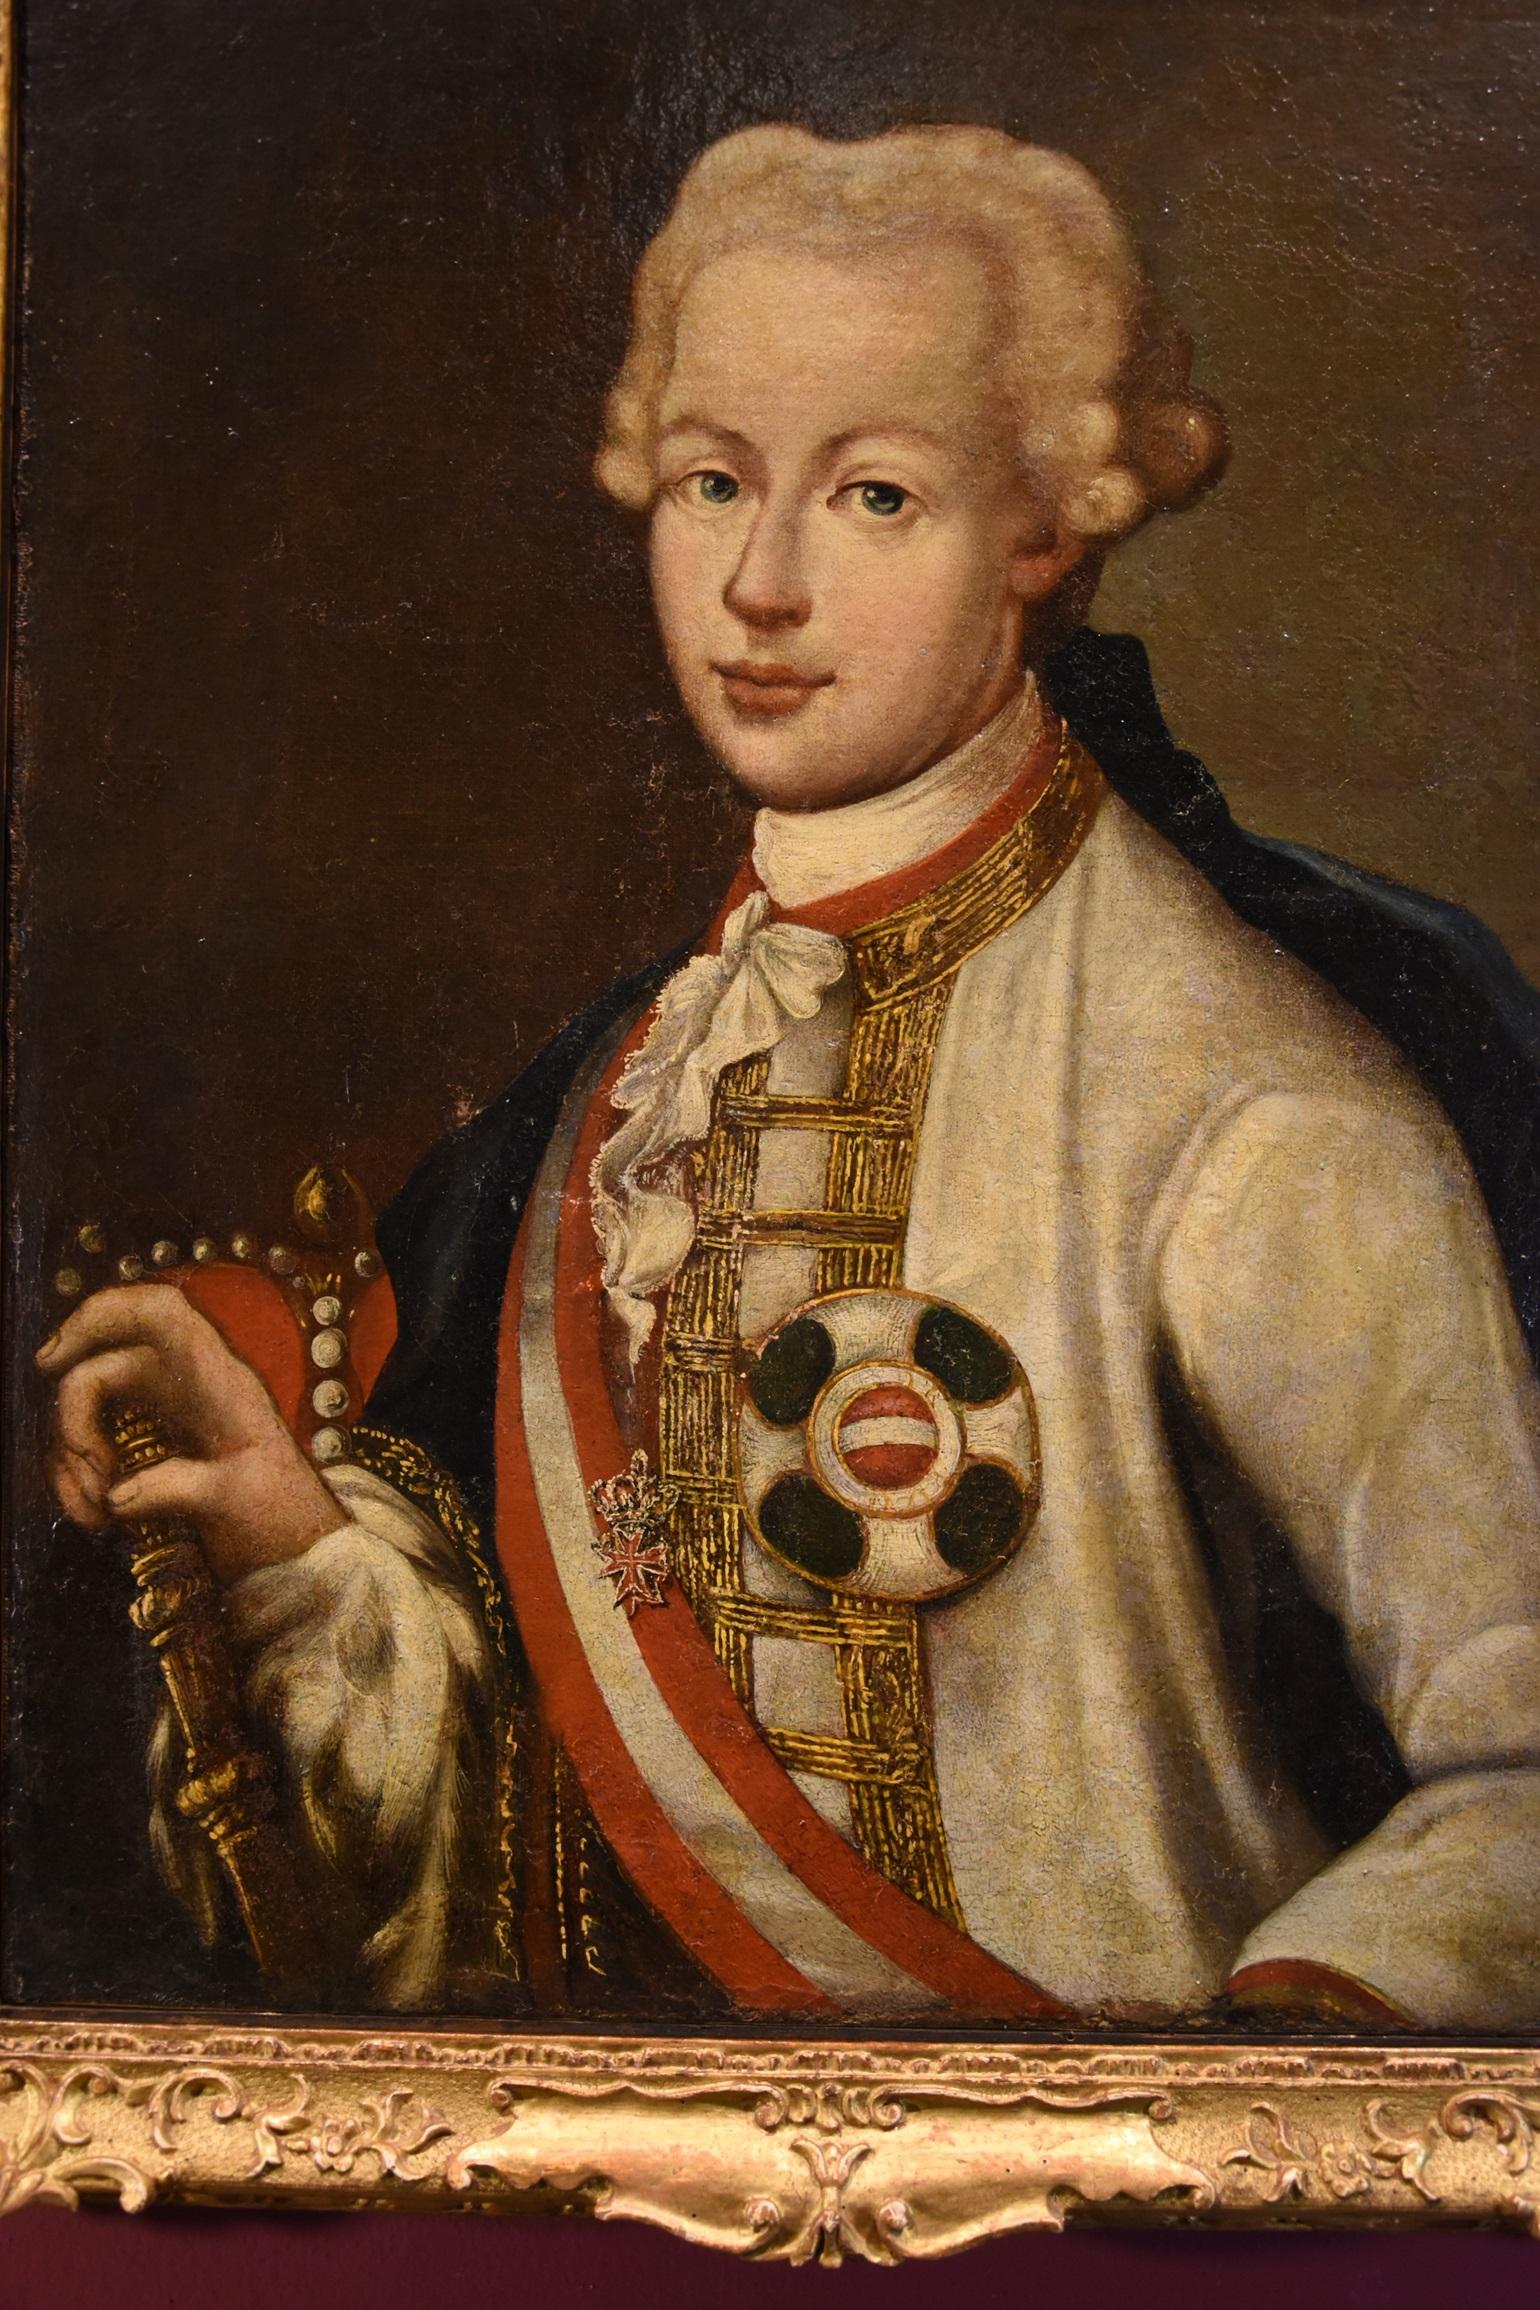 Portrait Emperor Peter Van Meytens Paint Oil on canvas 18th Century Flemish Art 1